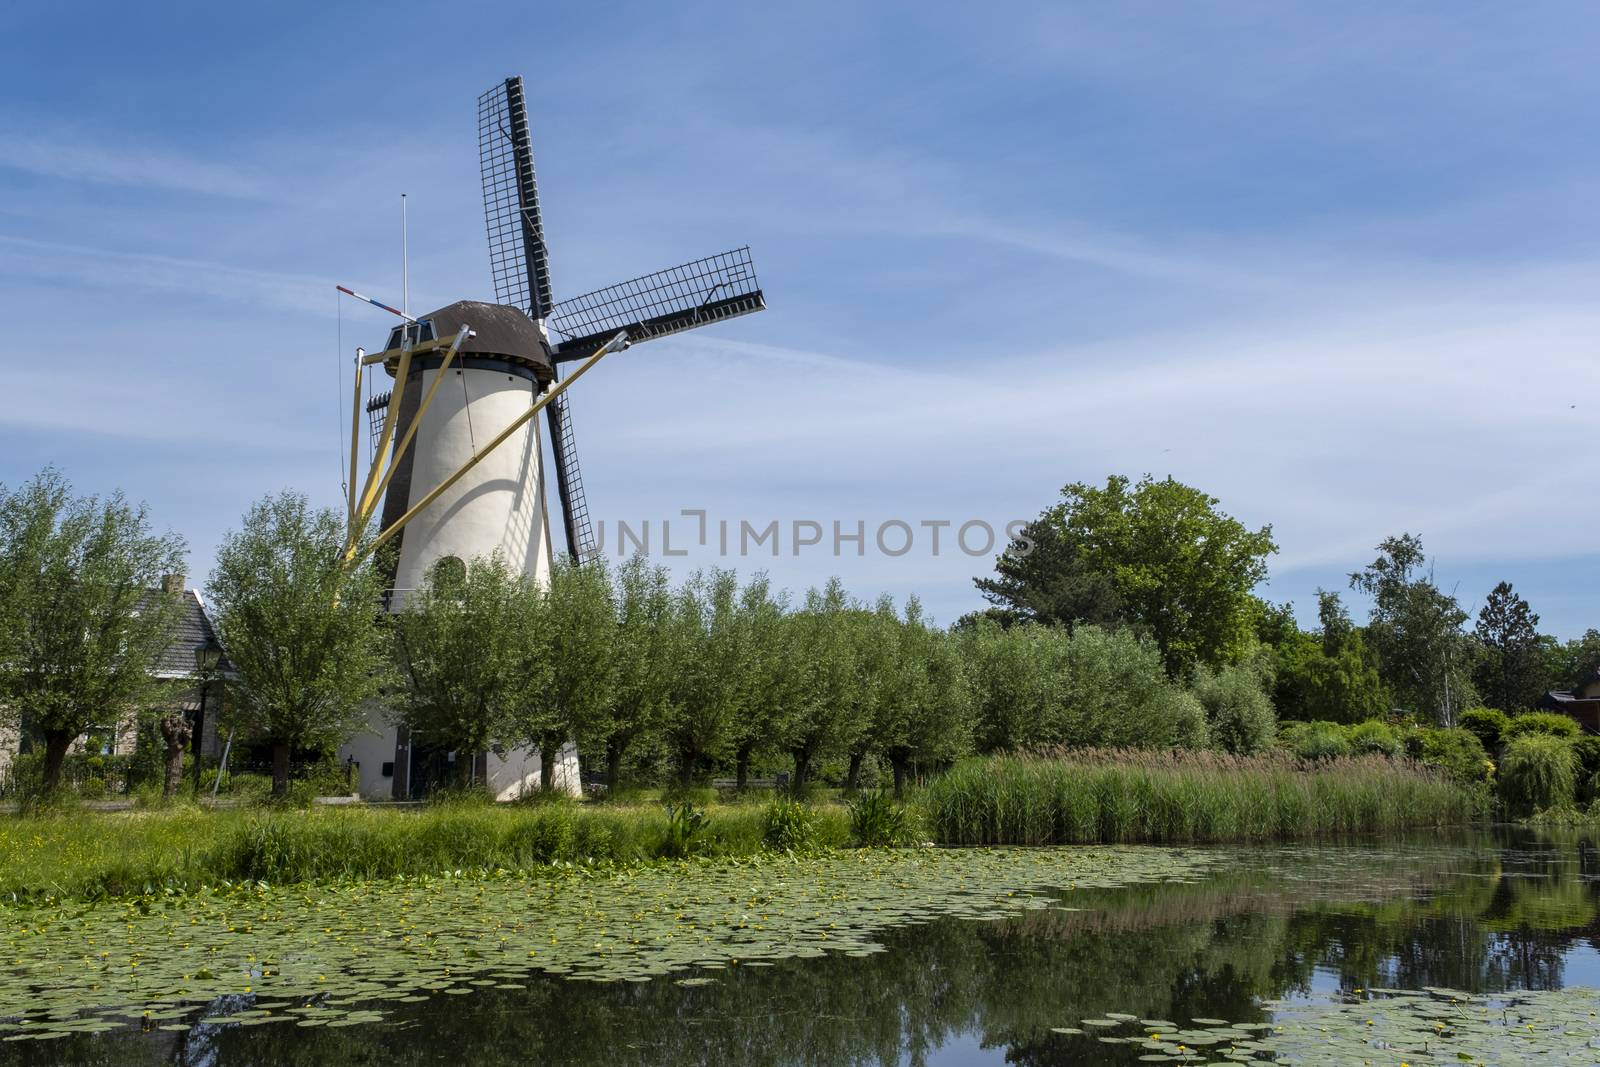 Windmill farm in summer in Rotterdam, the Netherlands by Tjeerdkruse